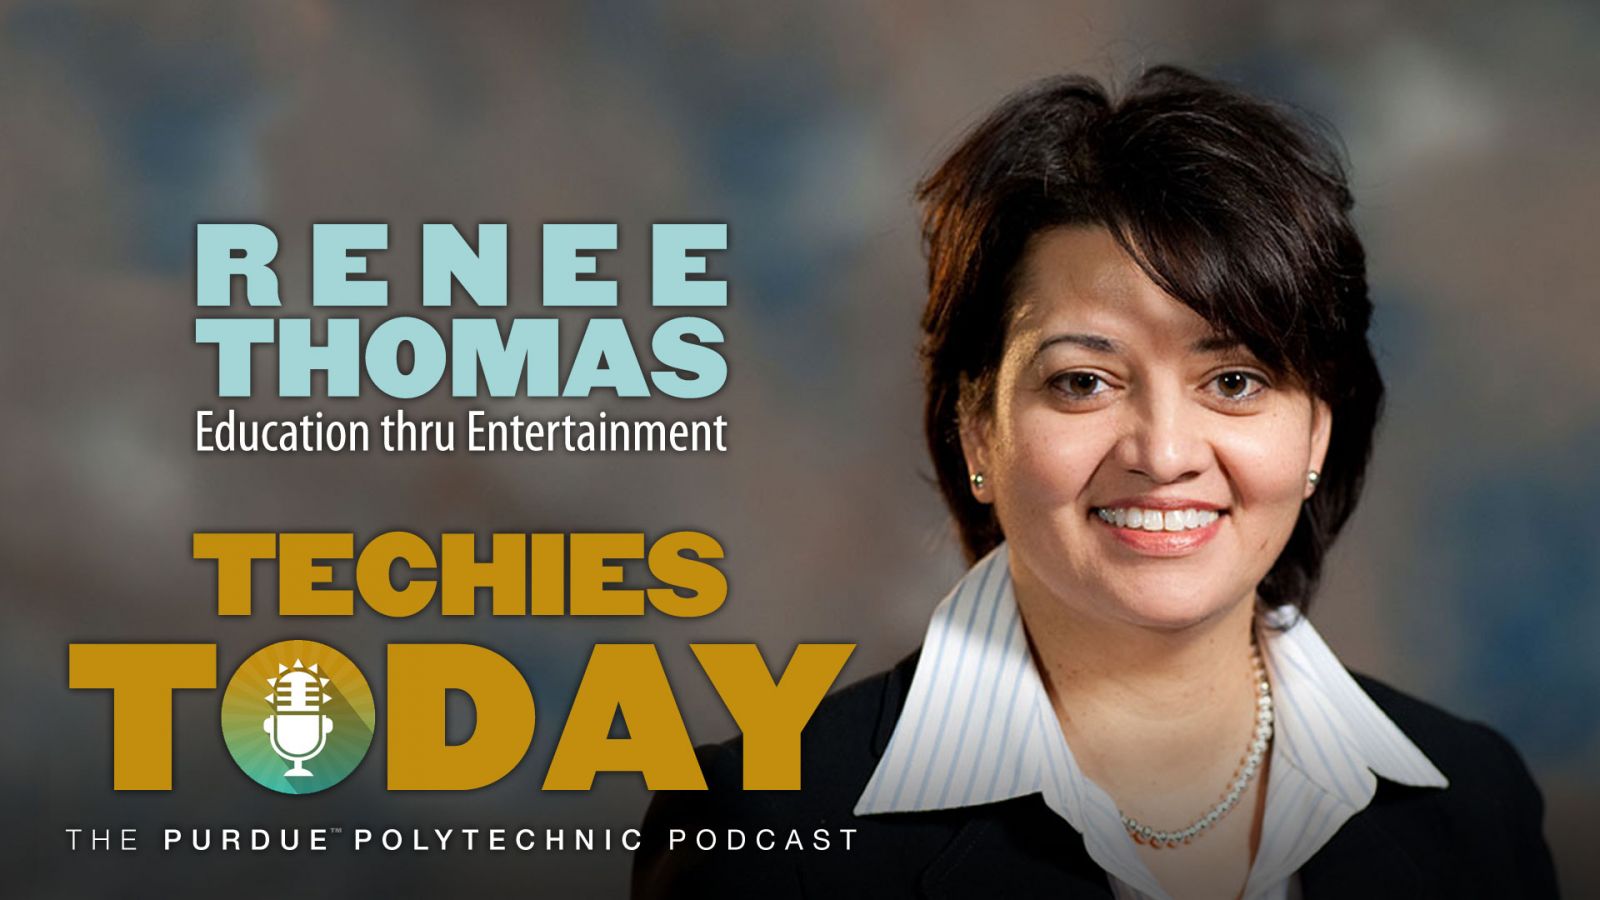 Renee Thomas, Education thru Entertainment, on Techies Today, the Purdue Polytechnic Podcast